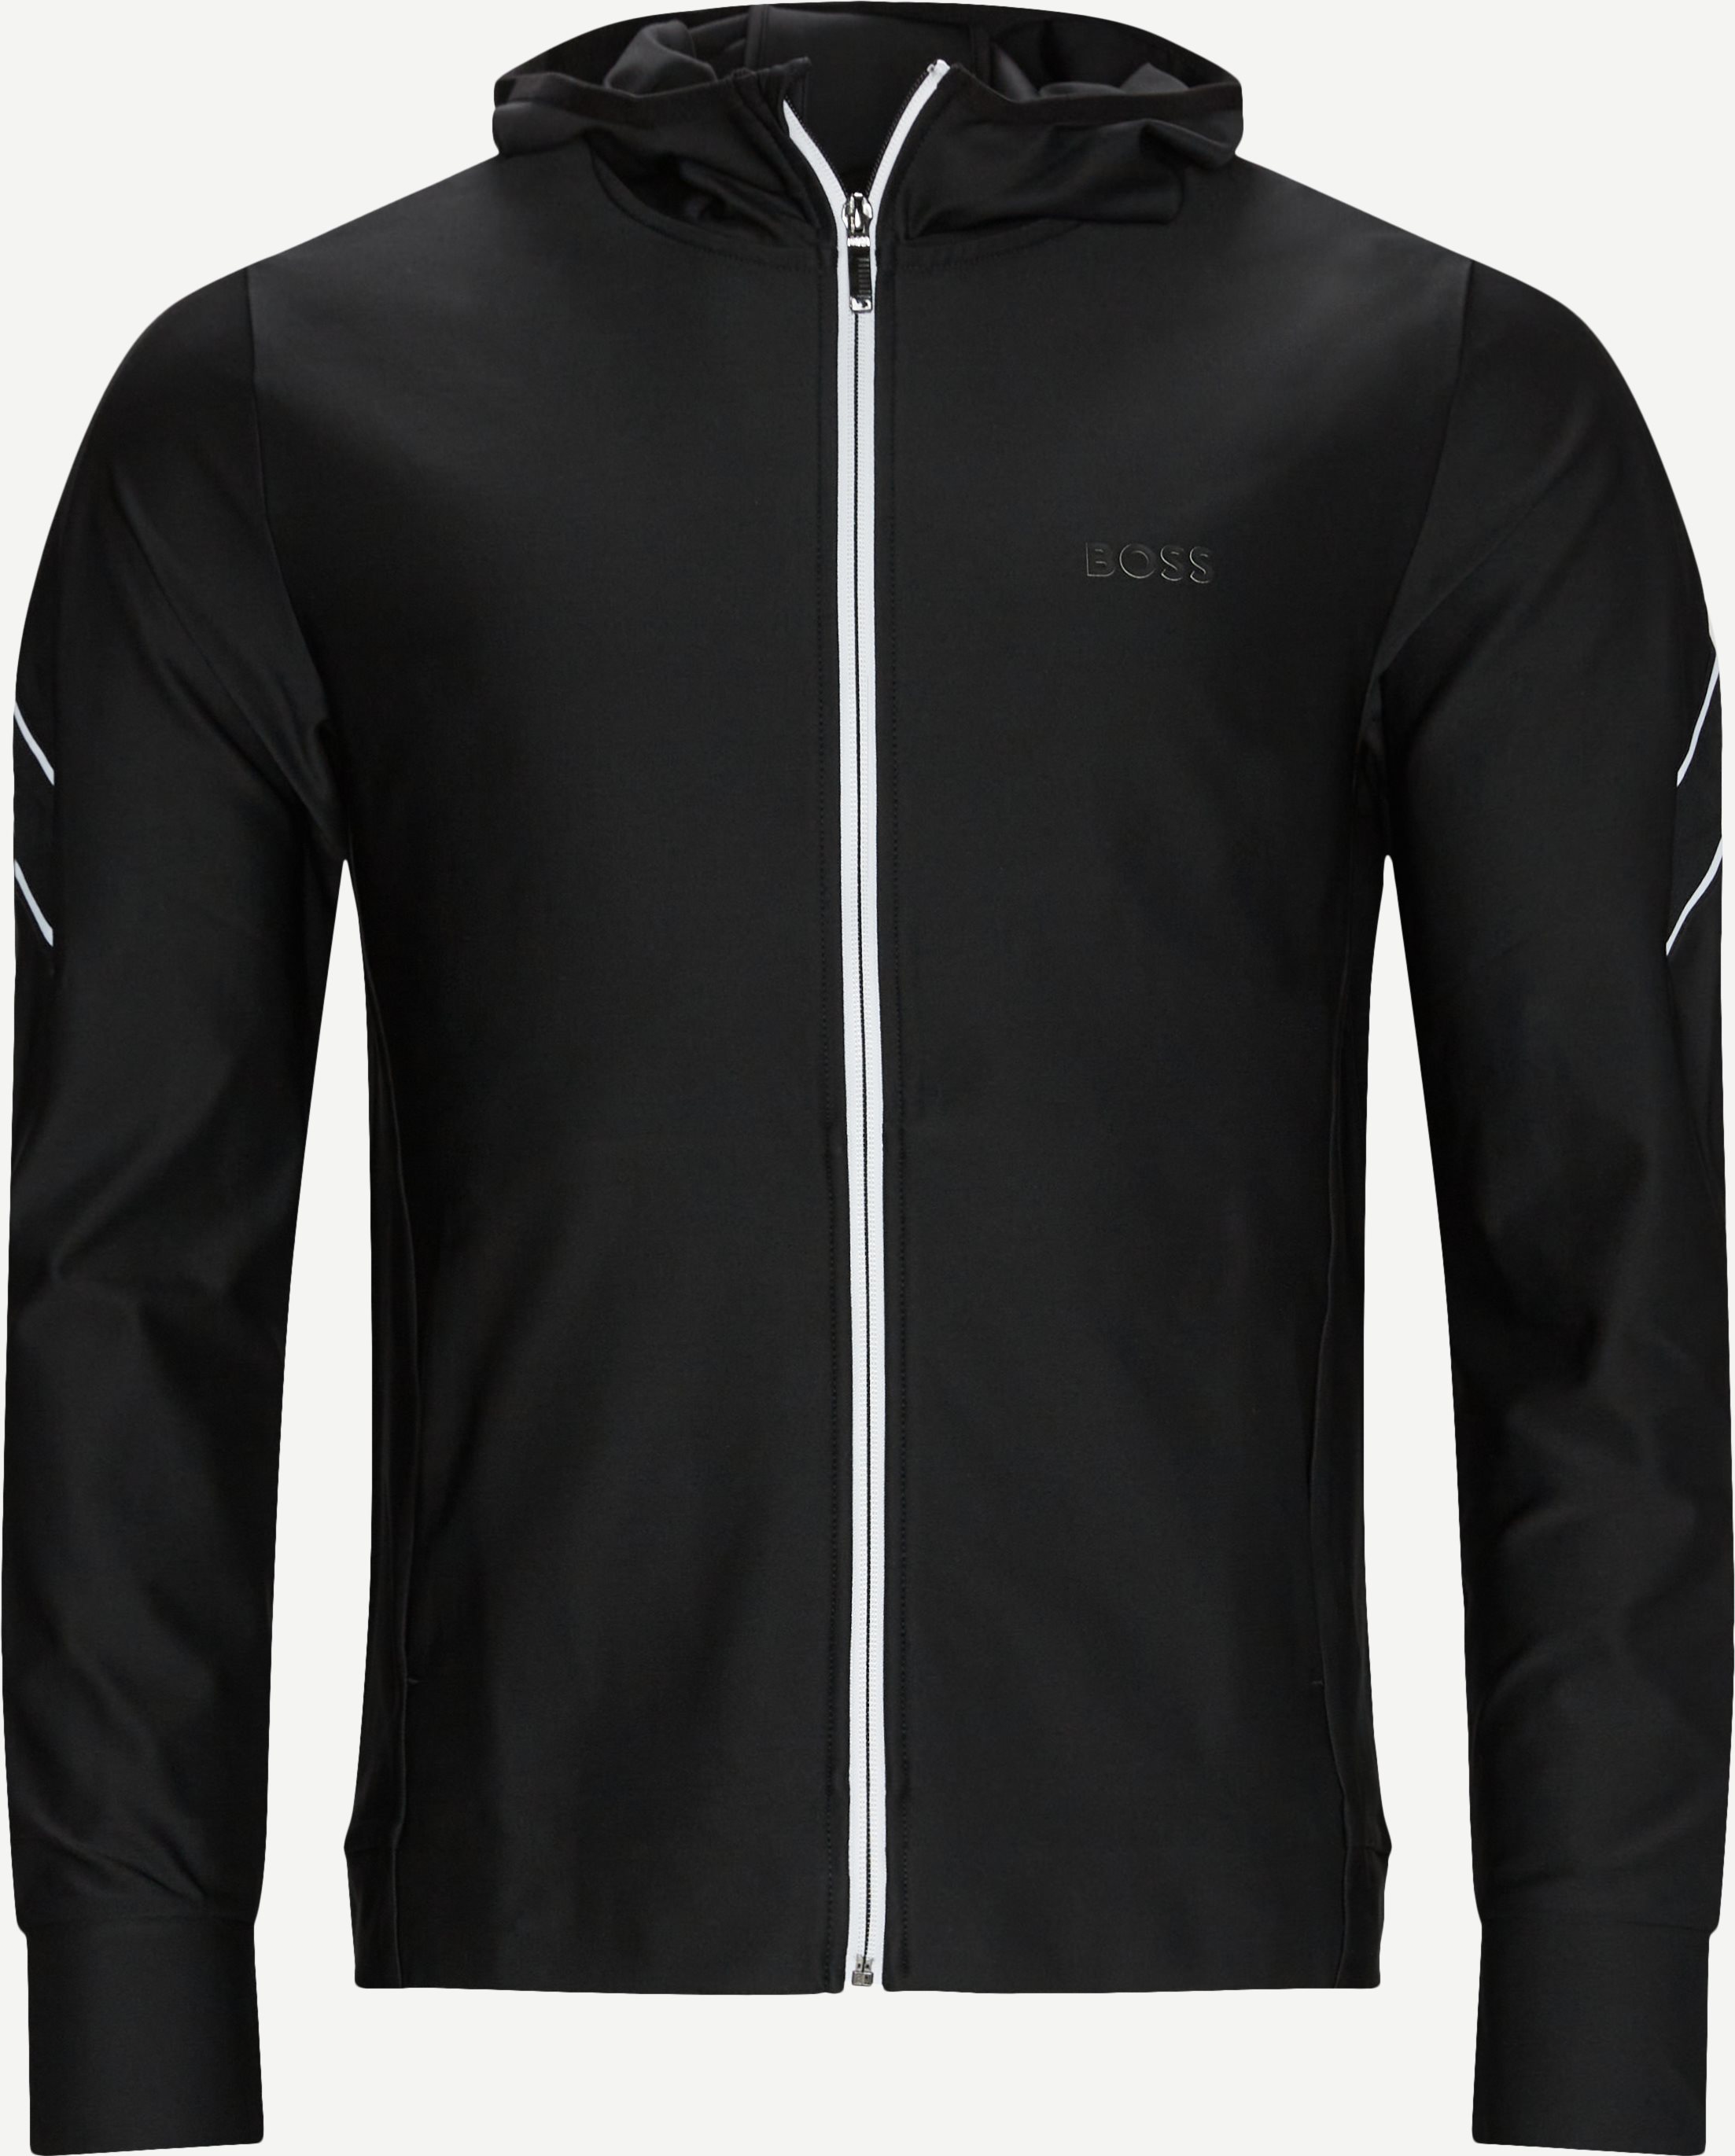 Sicon Gym Sweatshirt - Sweatshirts - Regular fit - Black